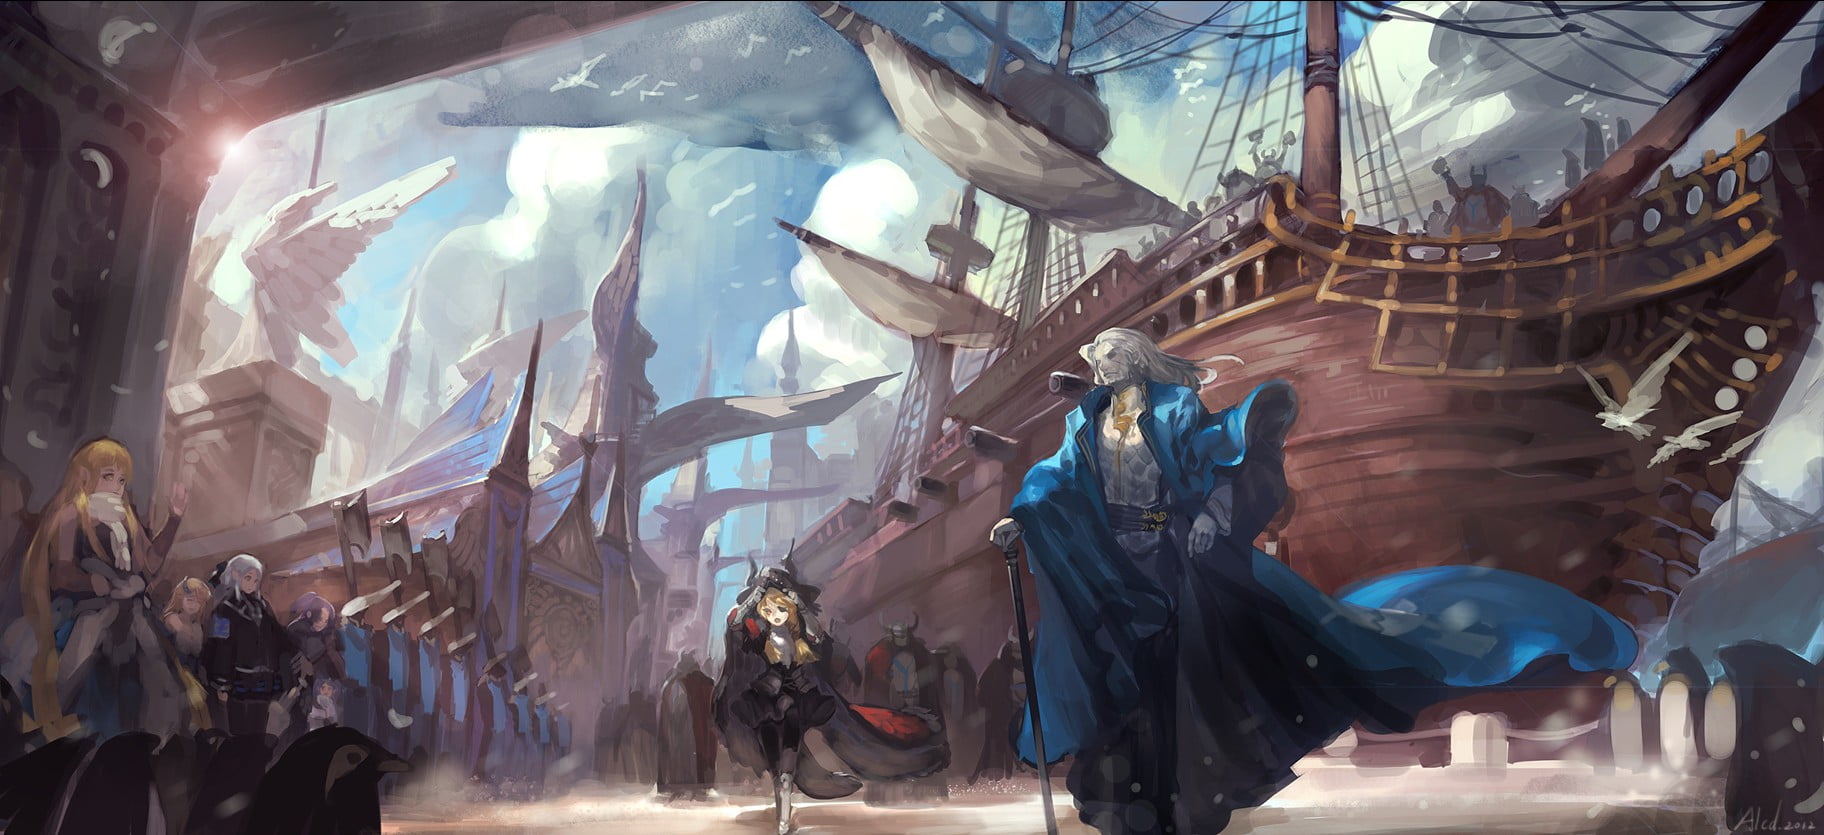 Iron Maiden Anime-pirate-ship-painting-wallpaper